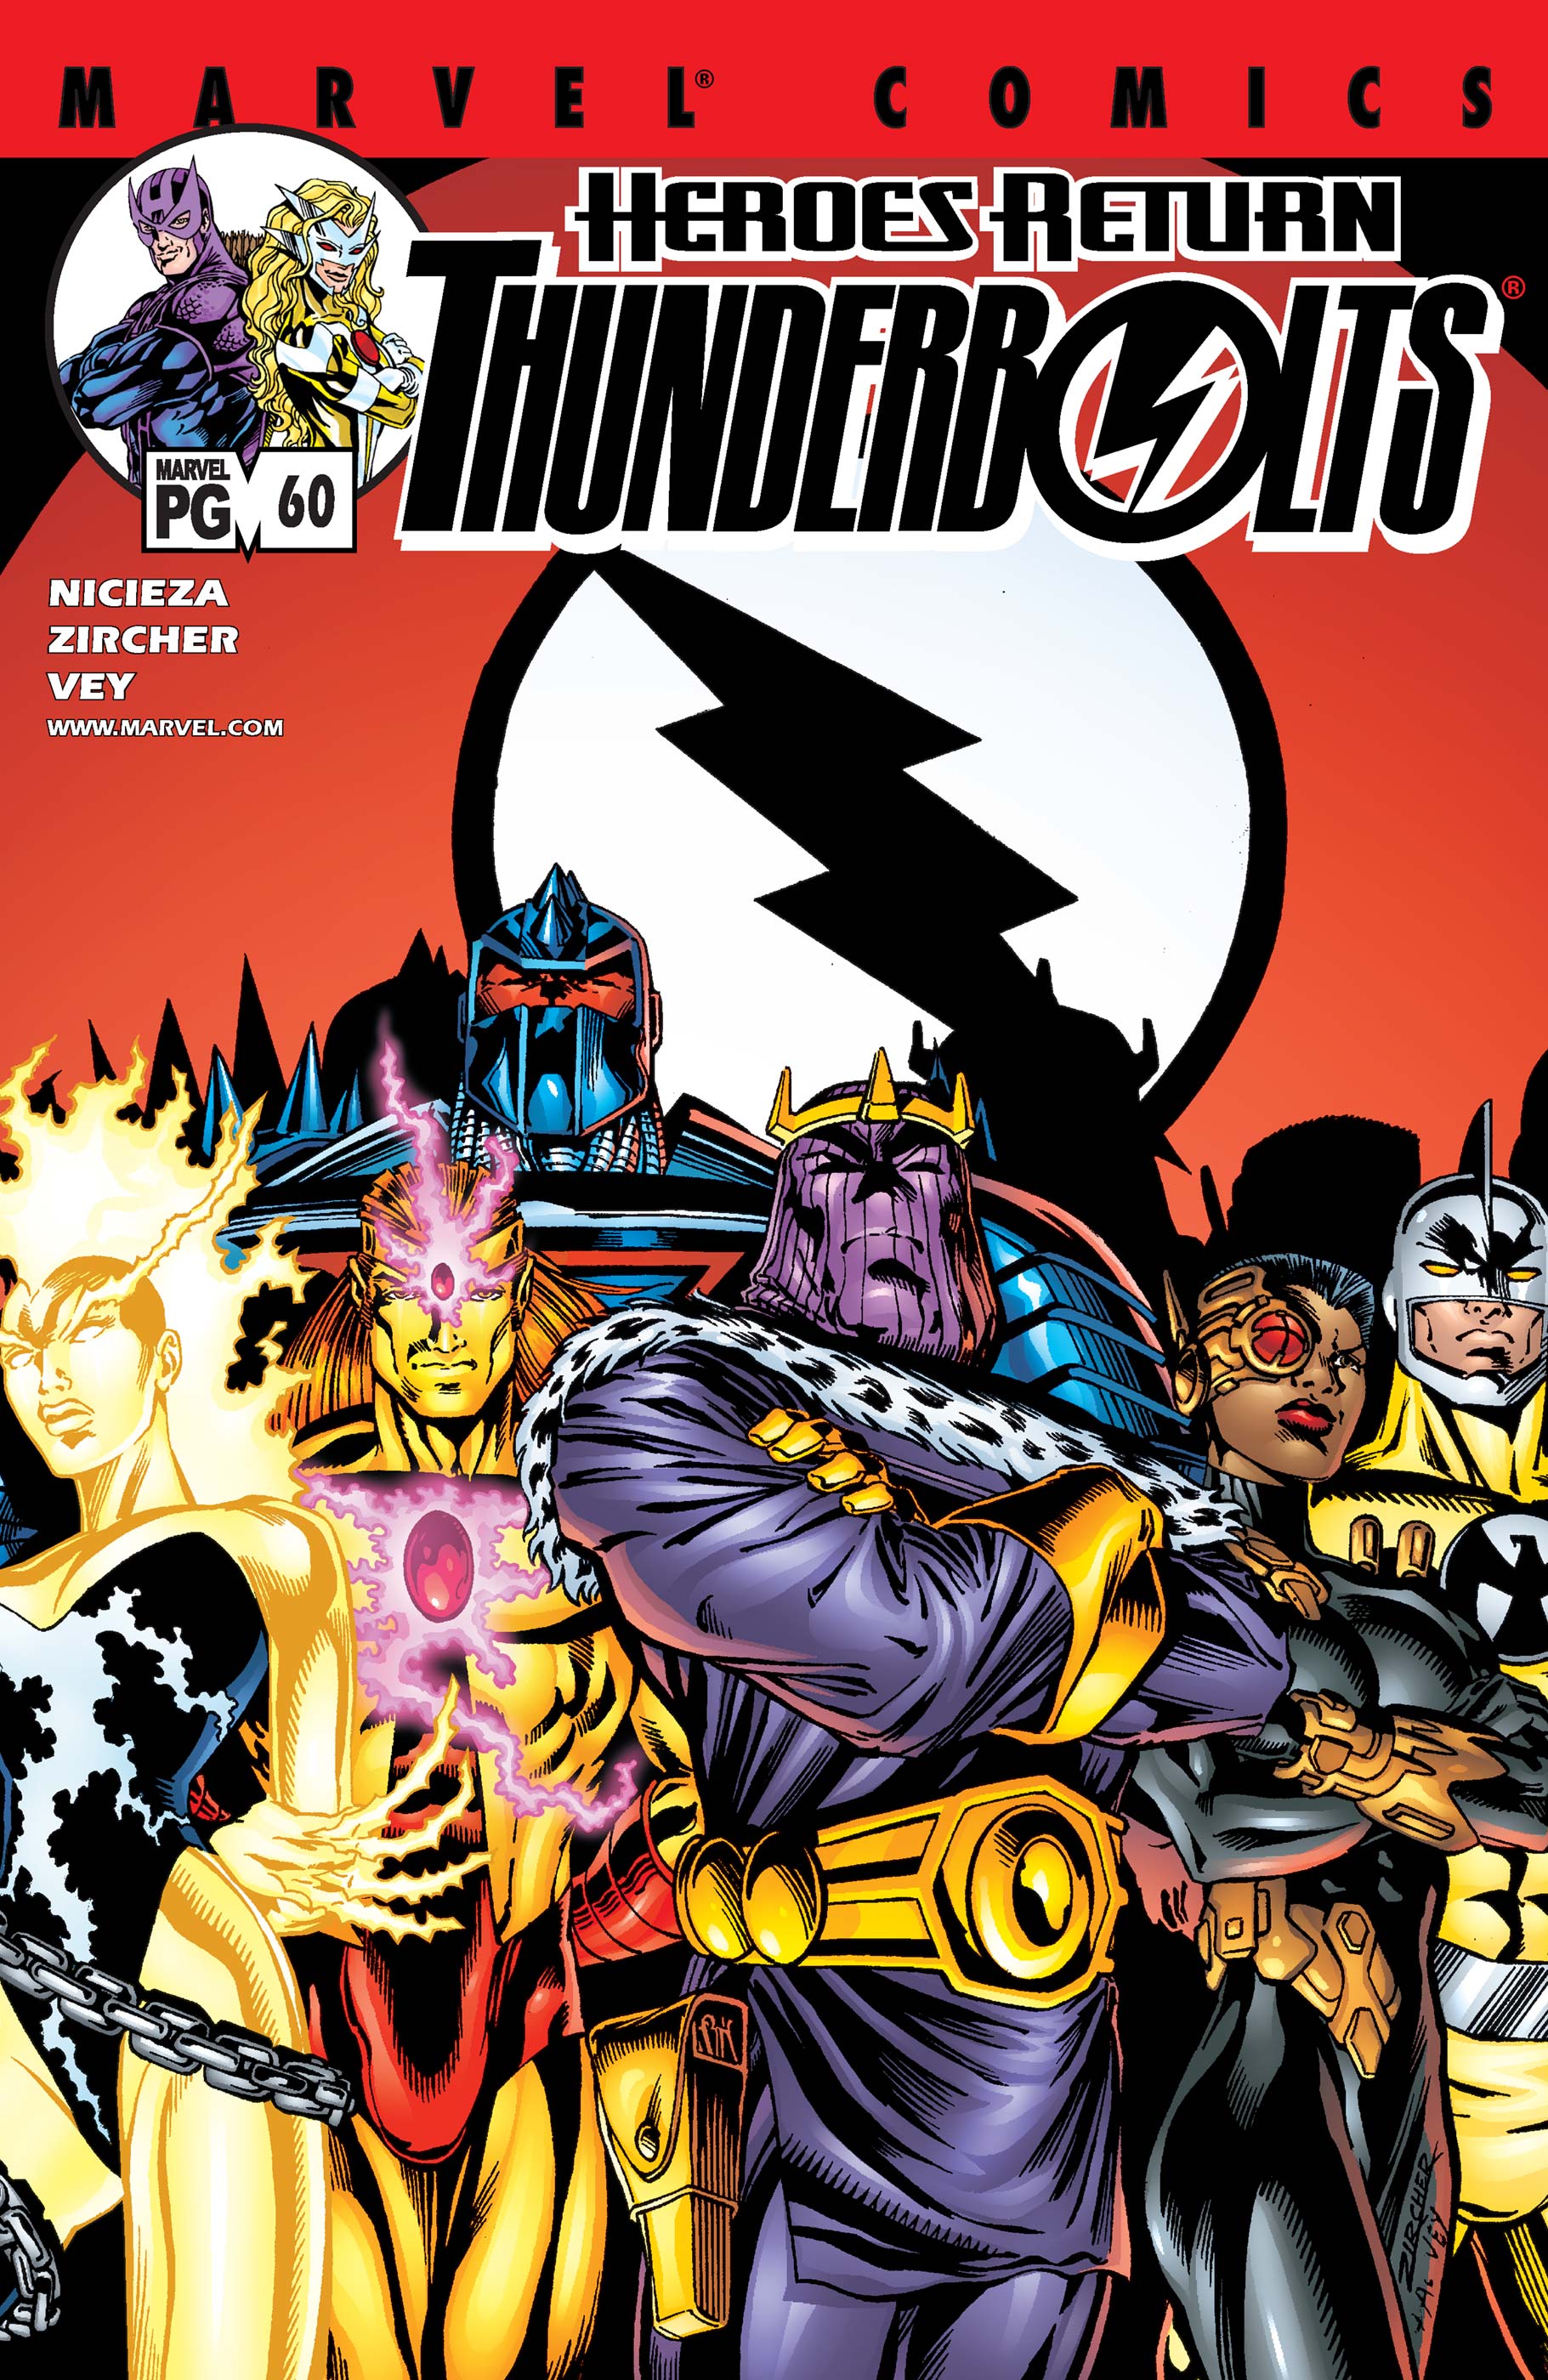 Thunderbolts (1997) #60